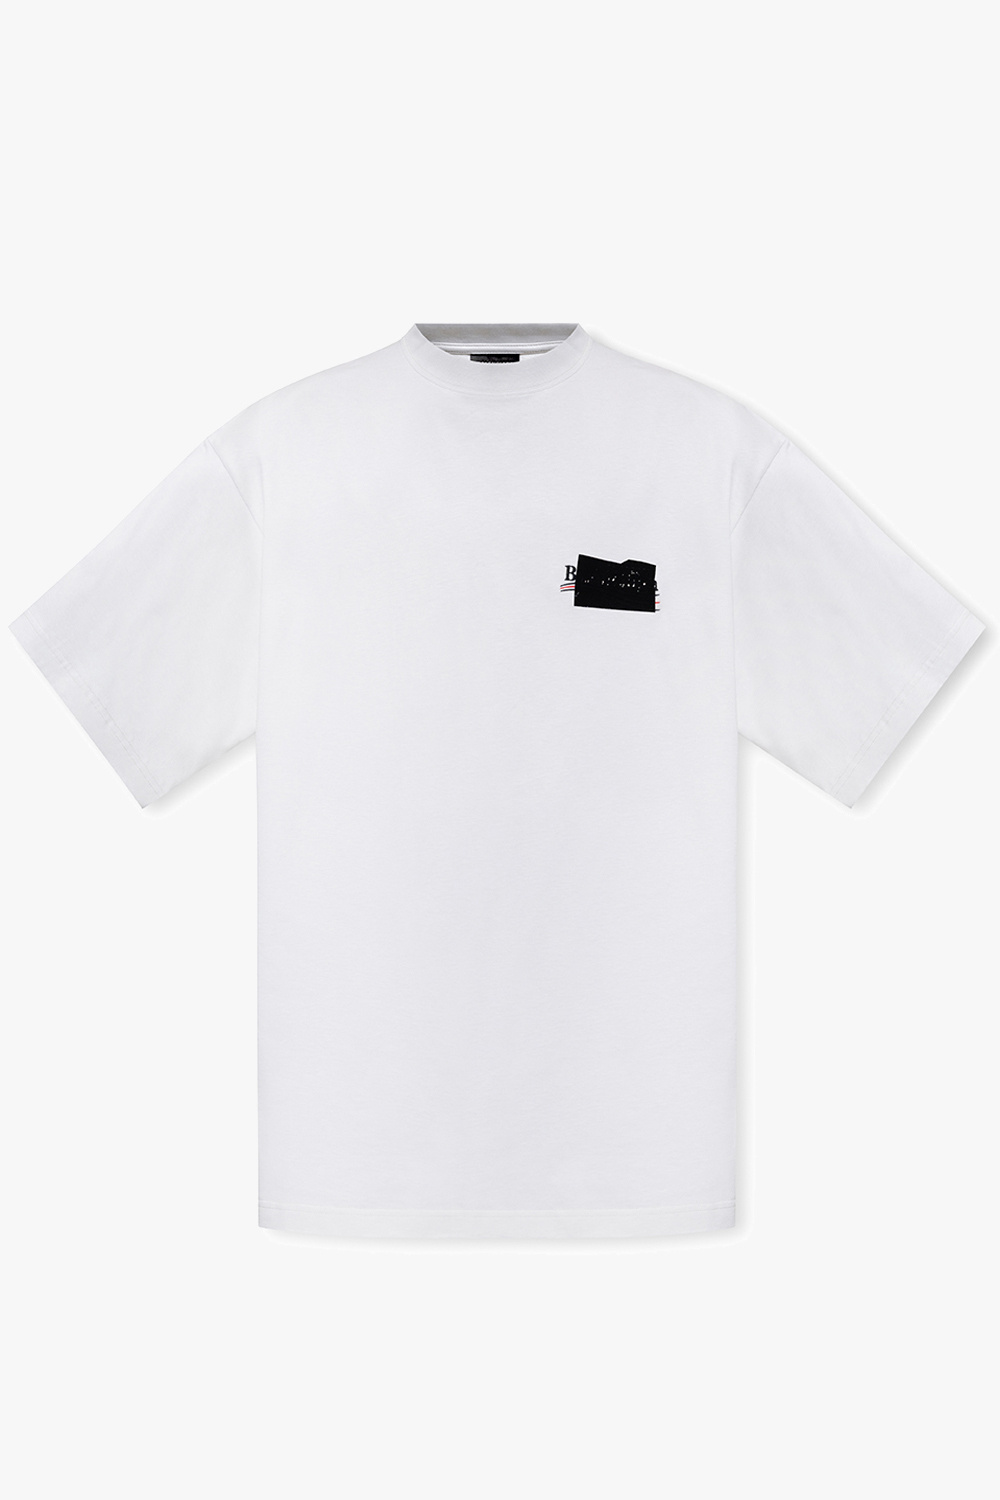 Balenciaga Printed T-shirt | Men's Clothing | Vitkac